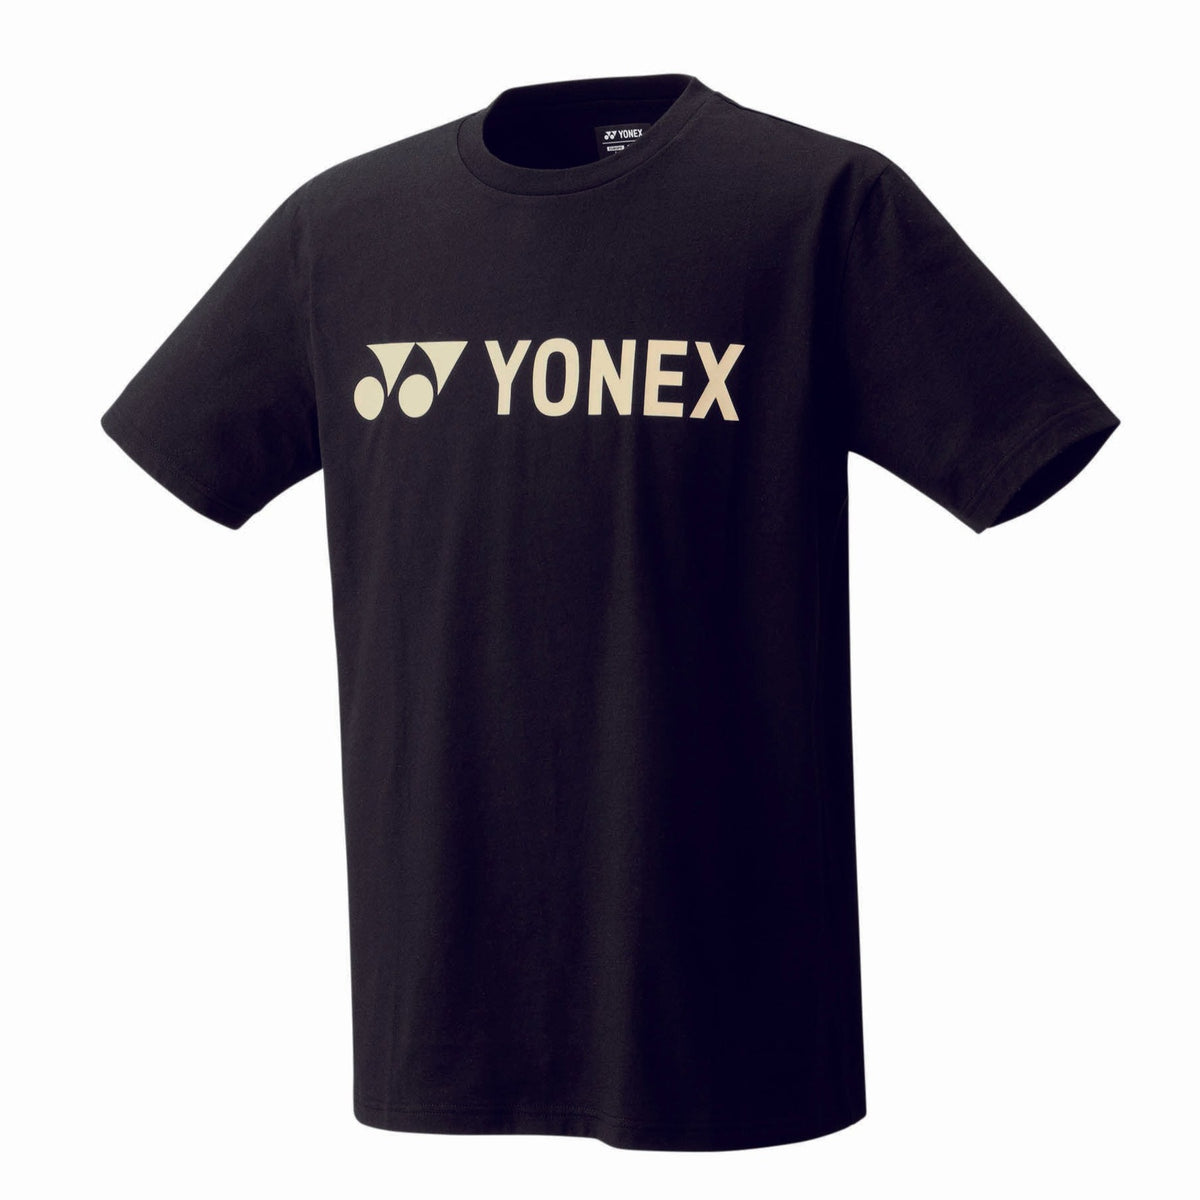 Yonex Unisex Shirt schwarz